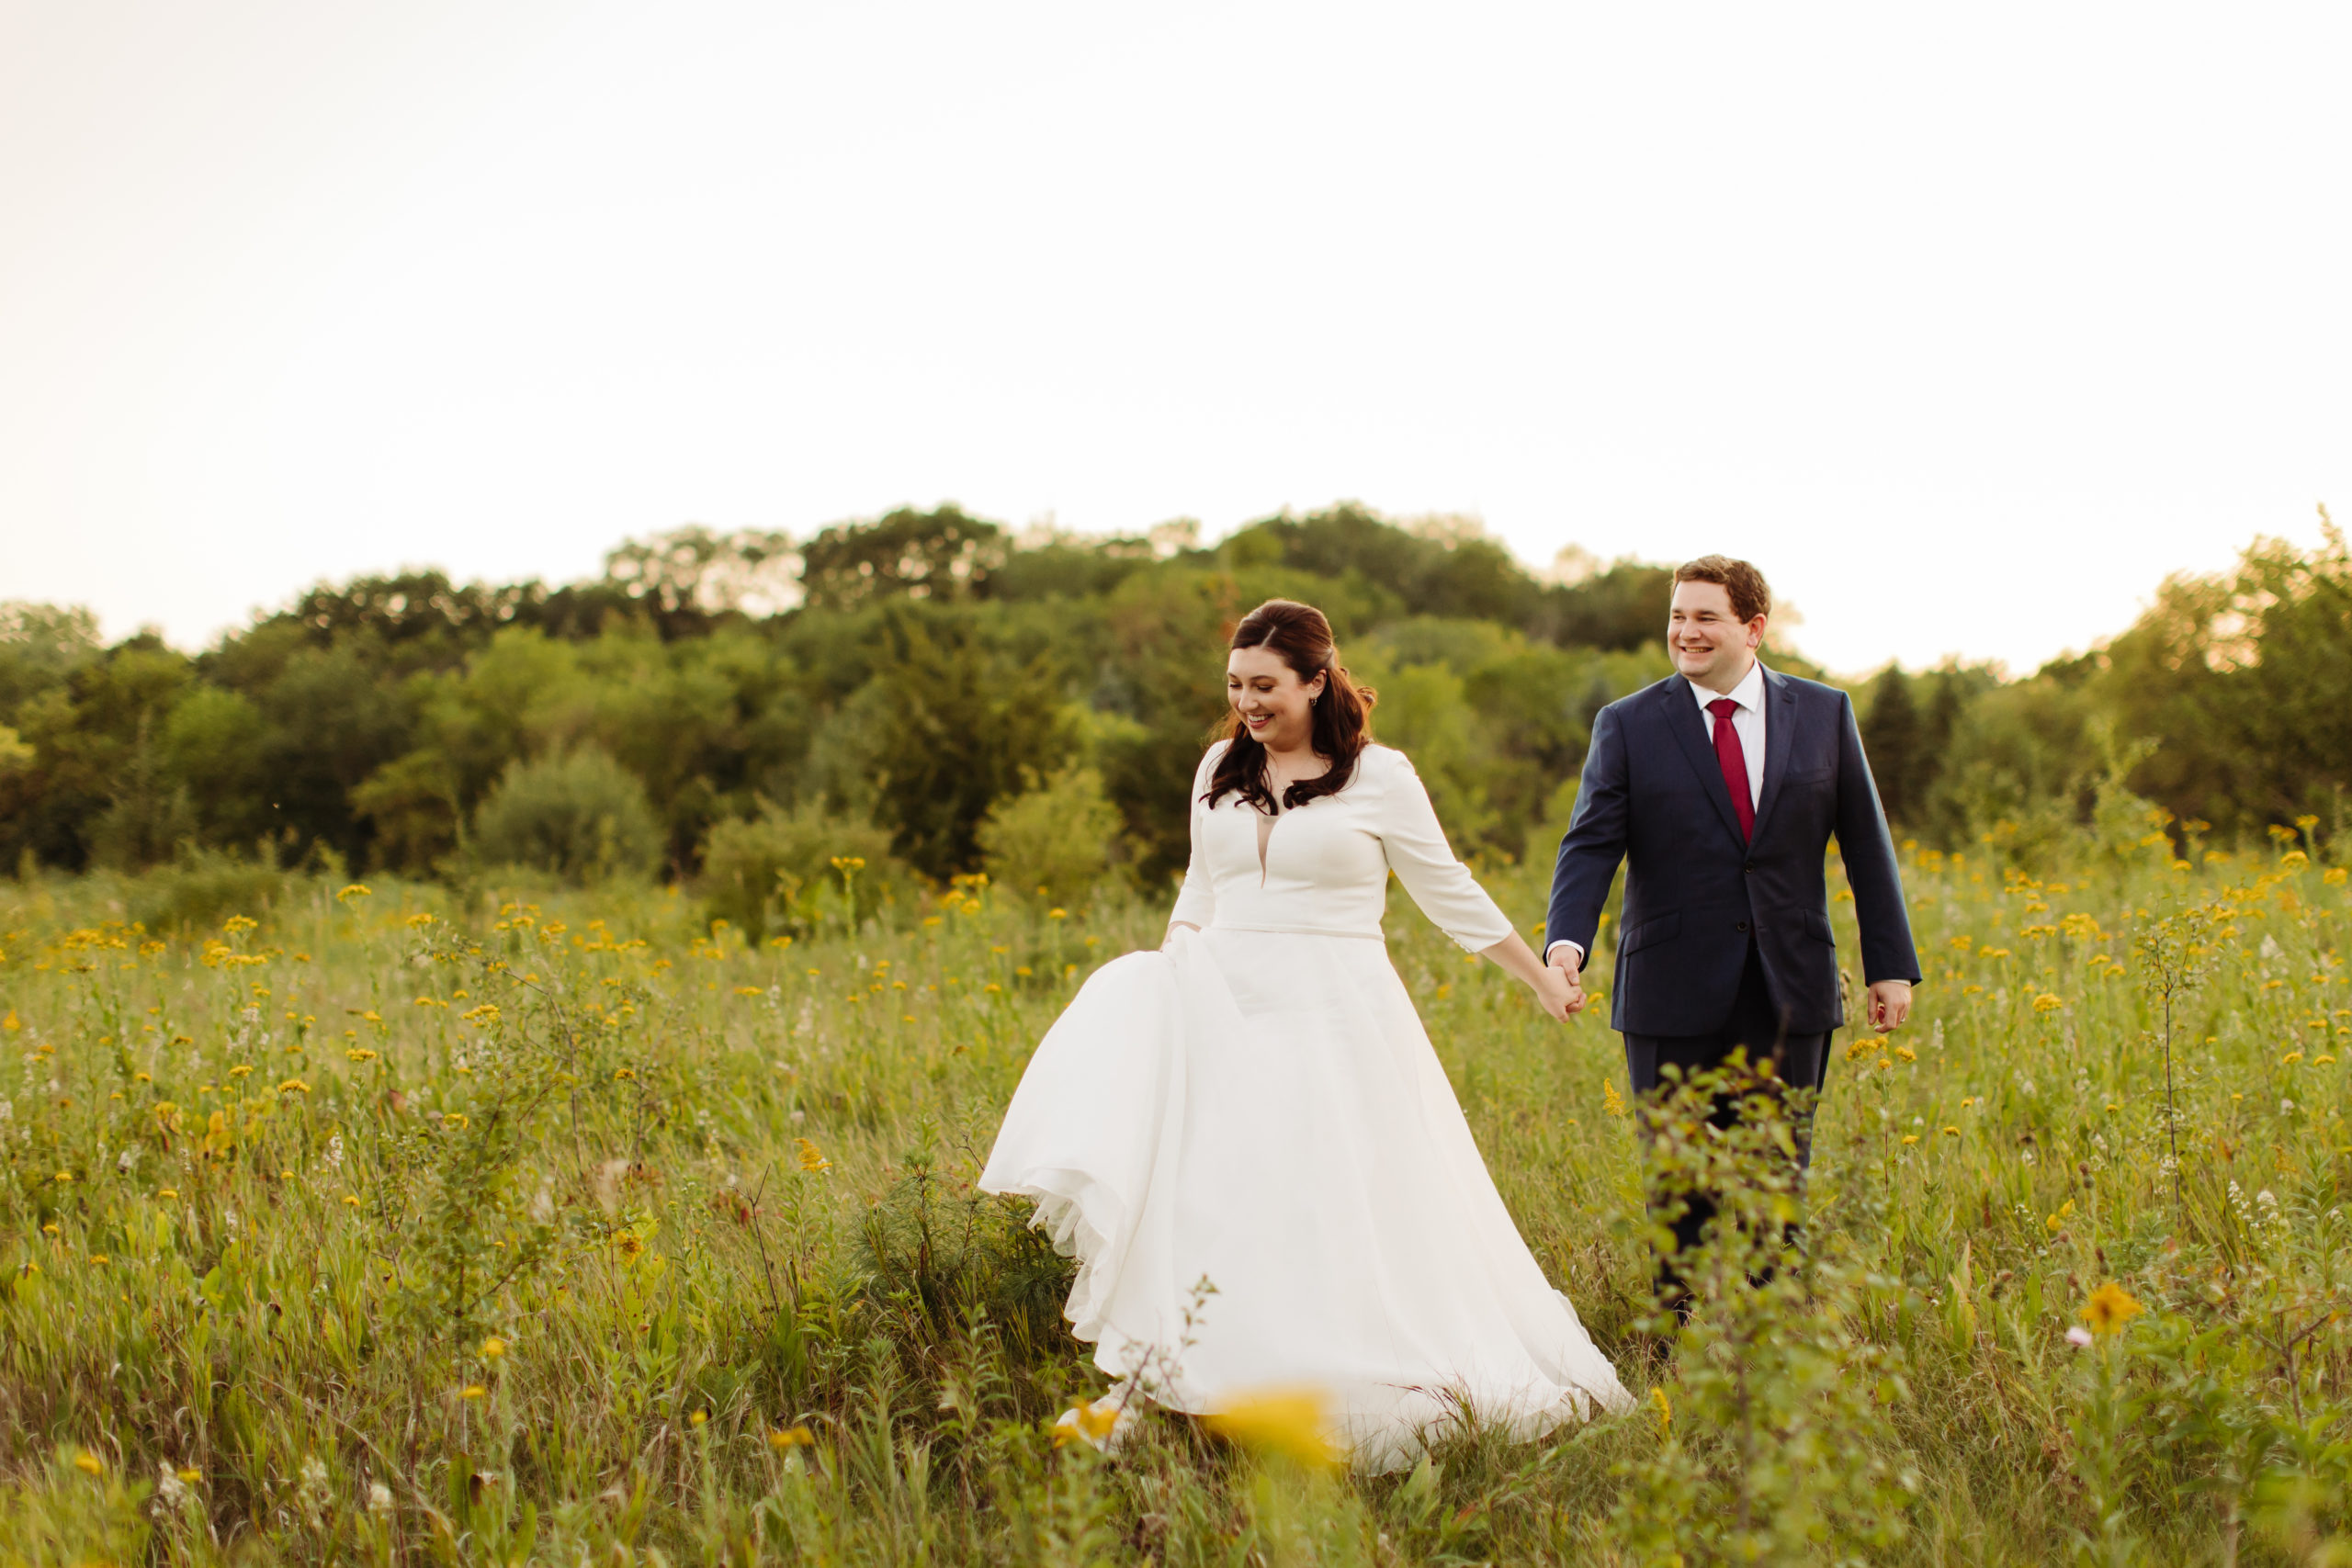 fall wedding photo in field